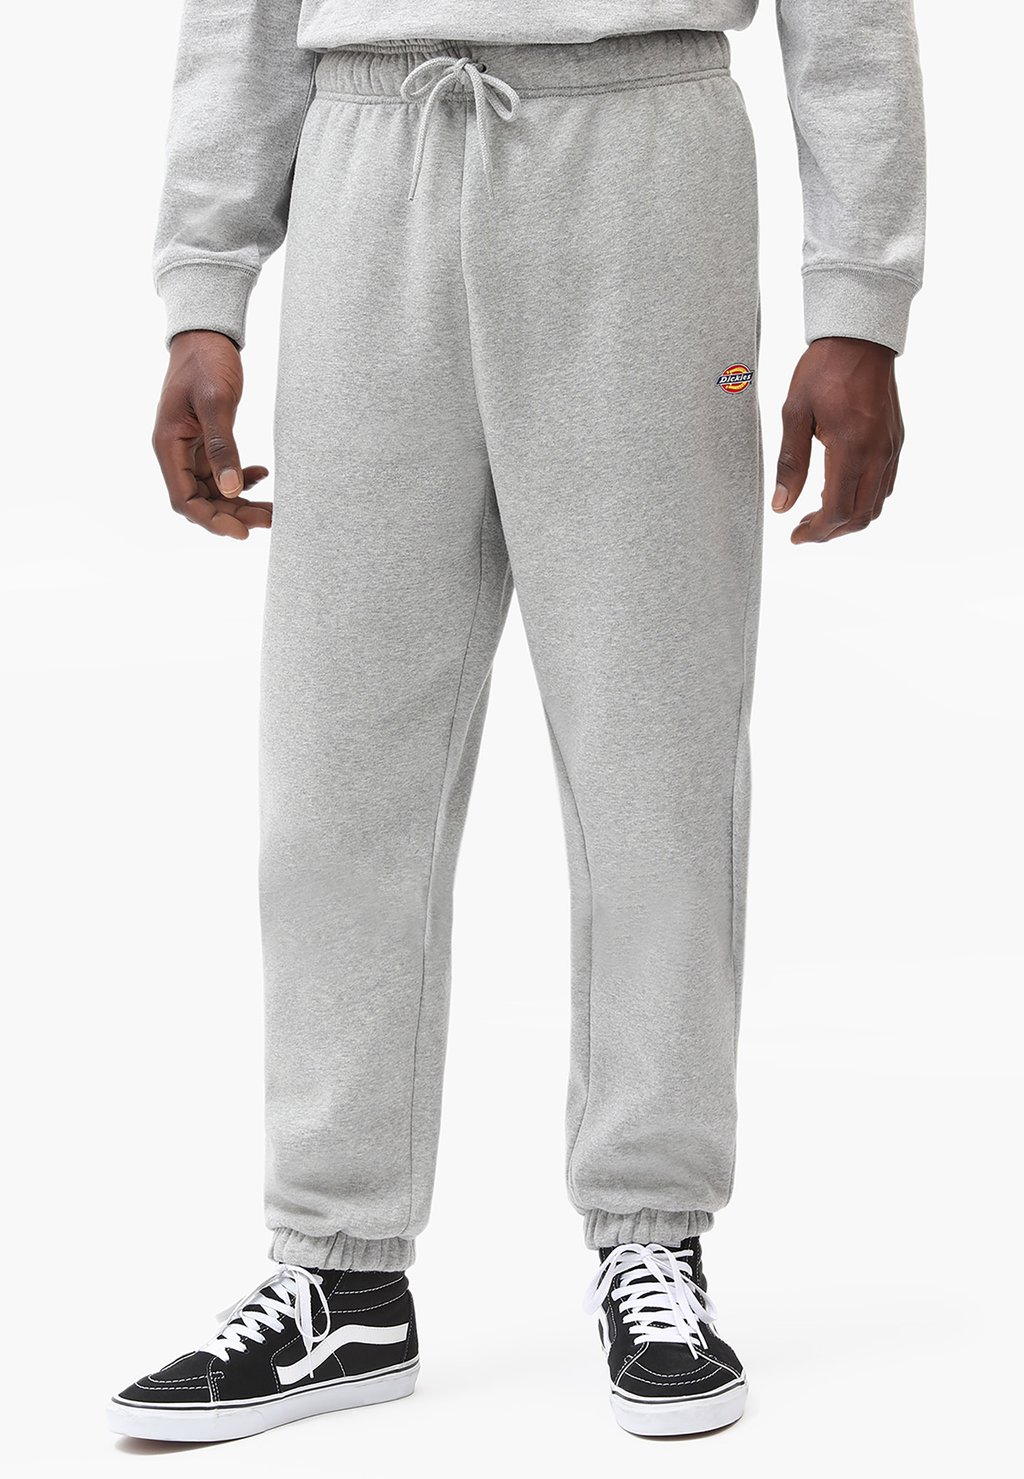 Спортивные брюки MAPLETON Dickies, серый меланж брюки спортивные мужские dysot серый меланж